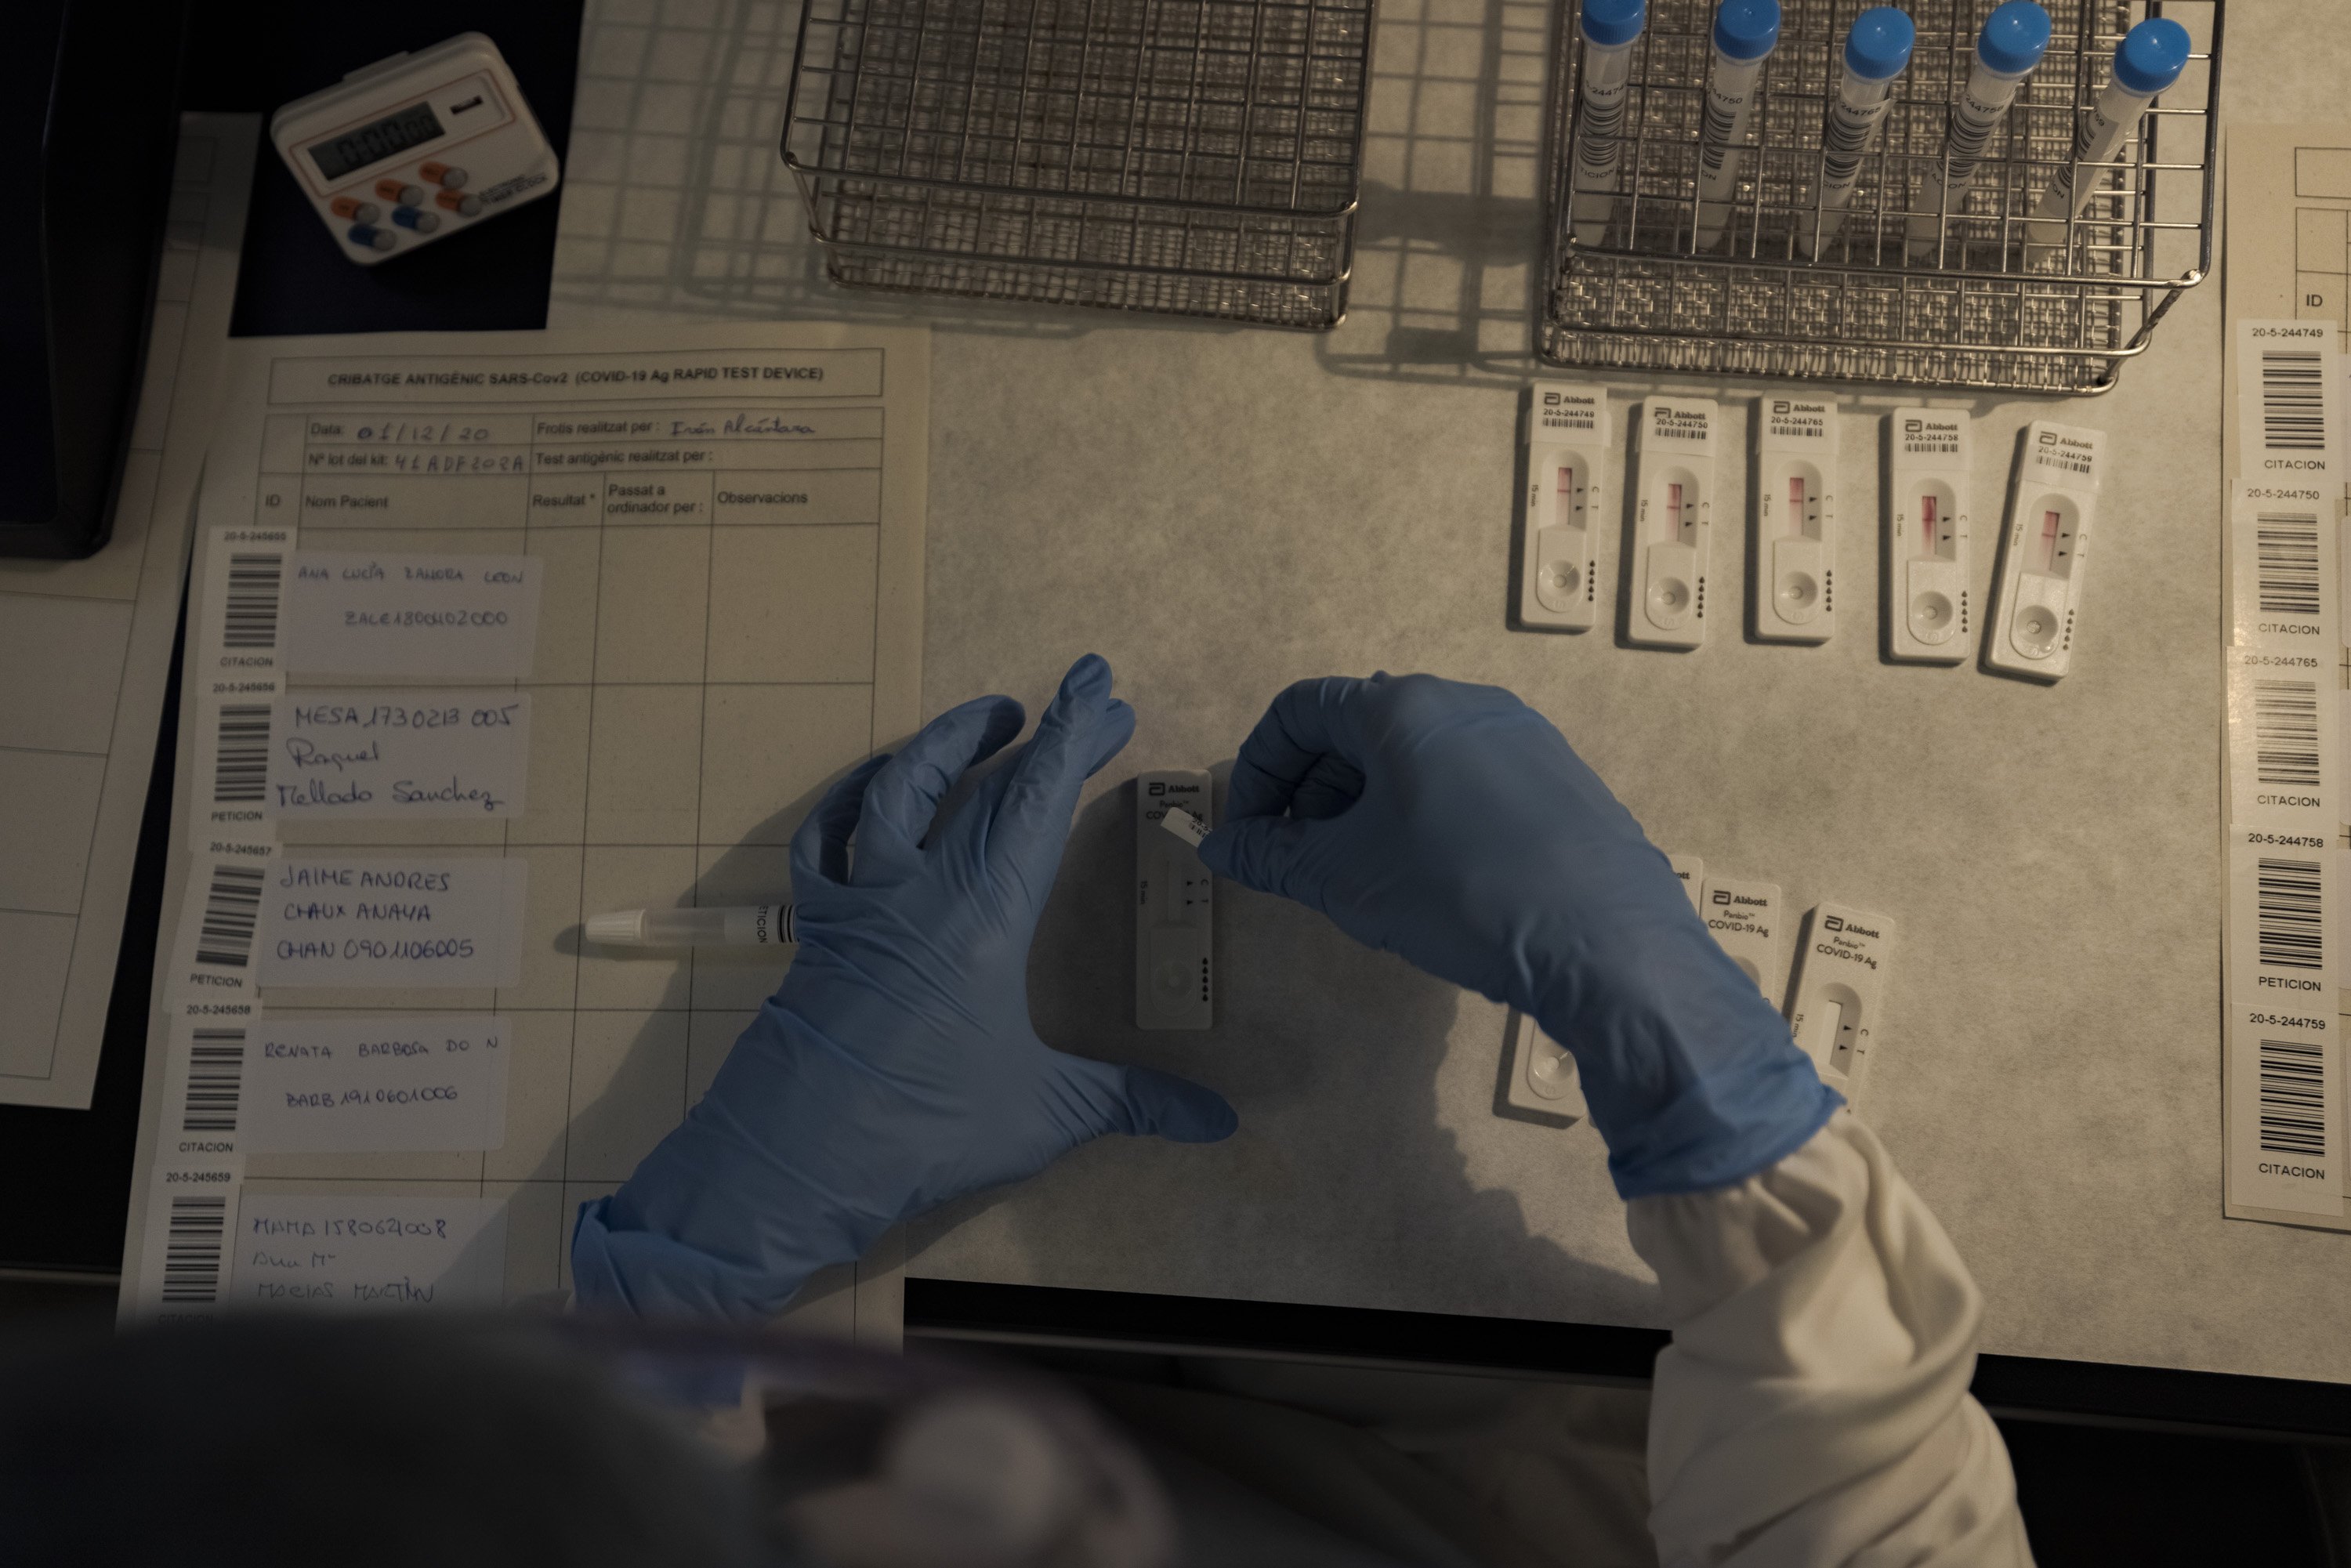 enfermeras Hospital Santo Paz Barcelona antigenos antigenes PCR test|tiesto rapido - Sergi Alcazar